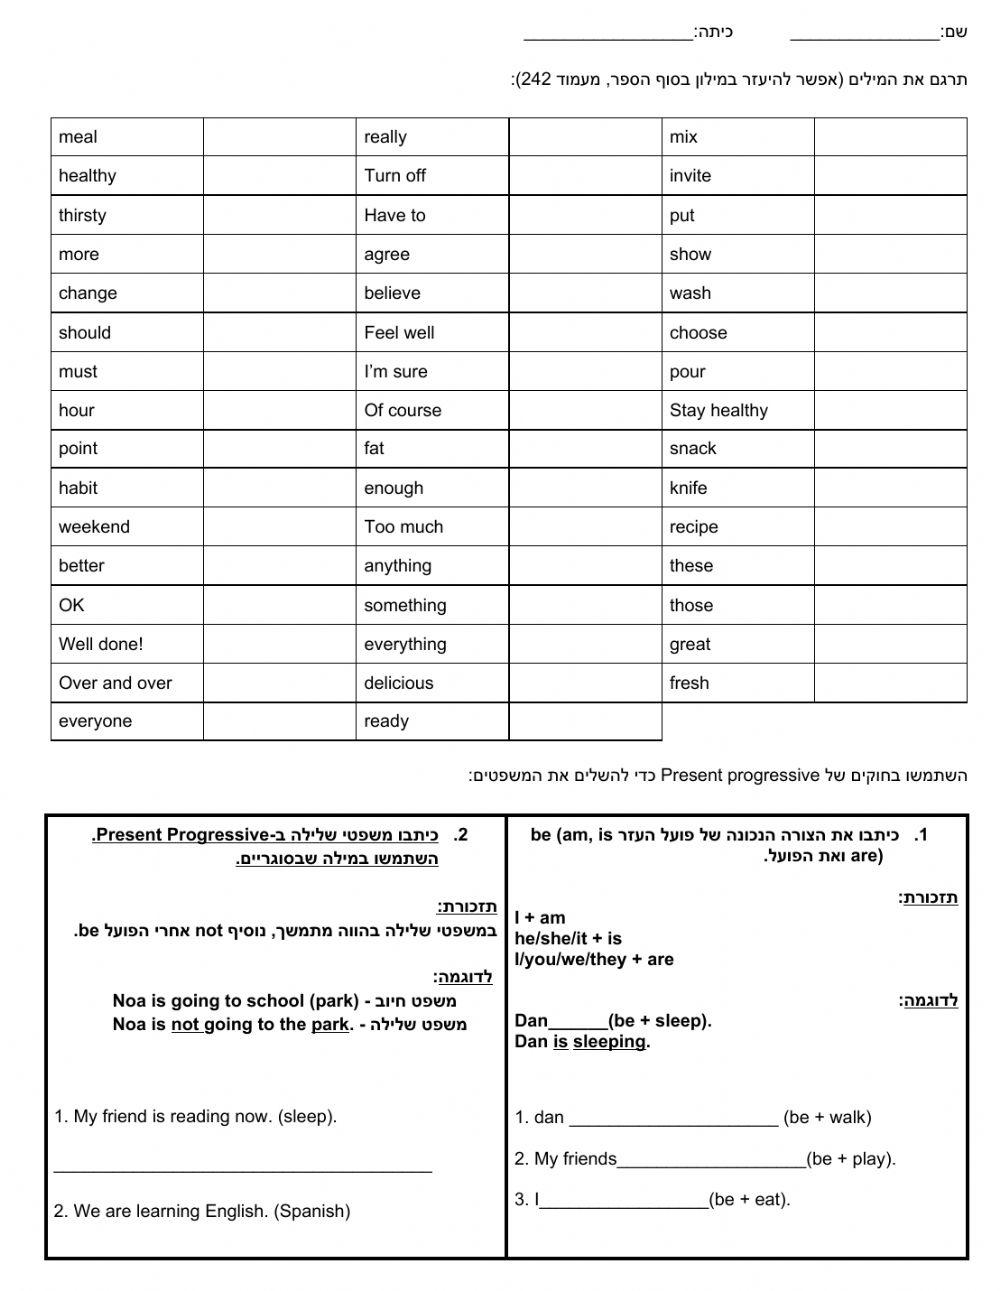 6th grade - present progressive and unit 3 part 1 vocabulary